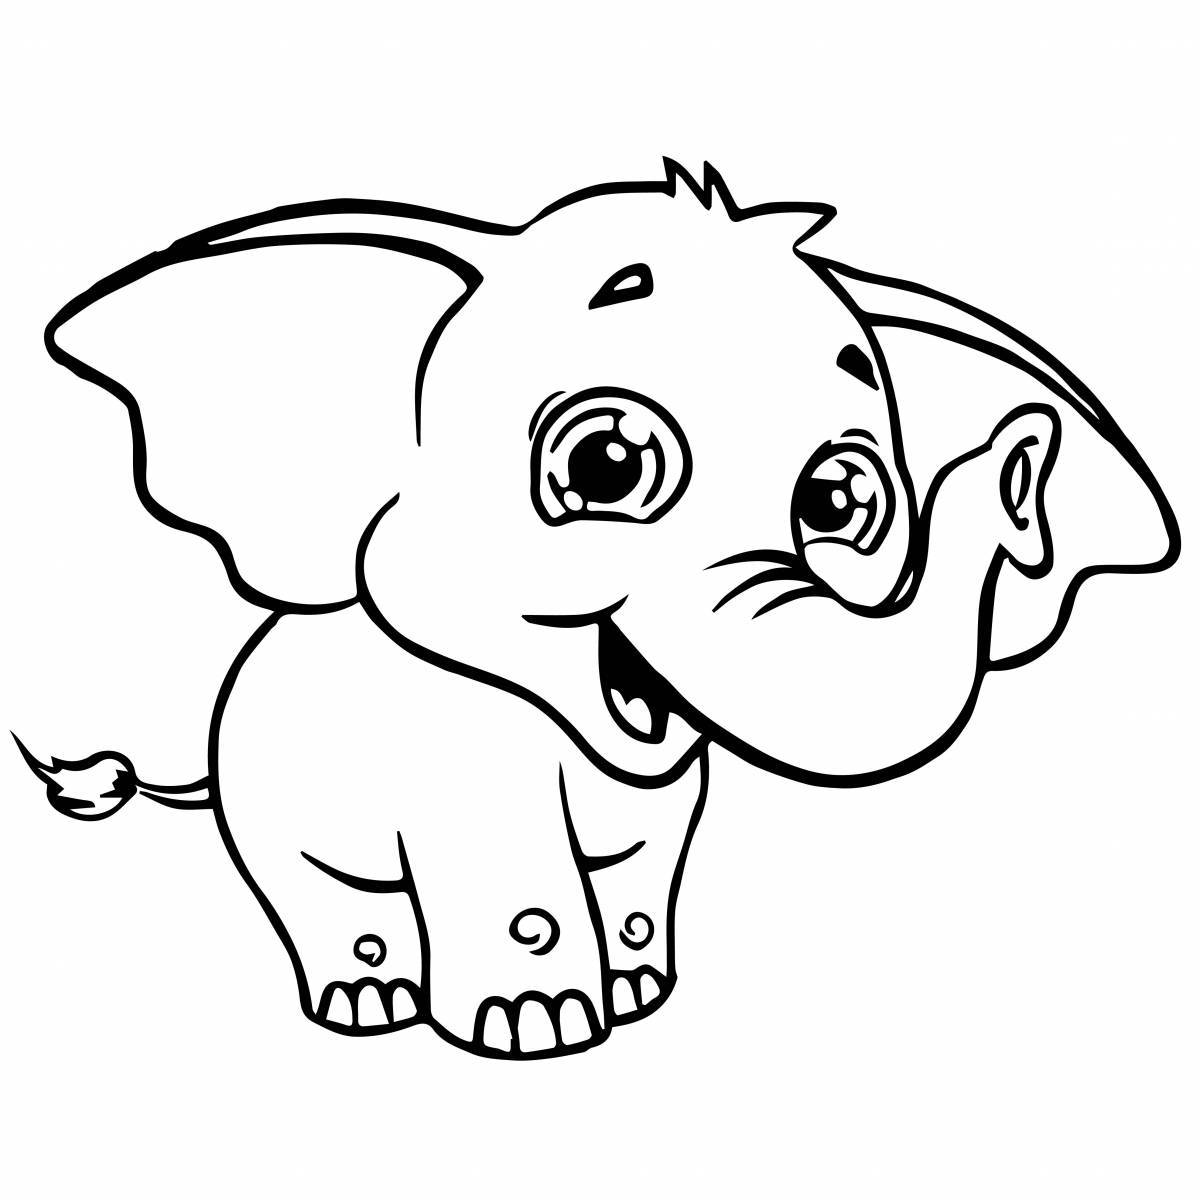 Elephant for kids #2